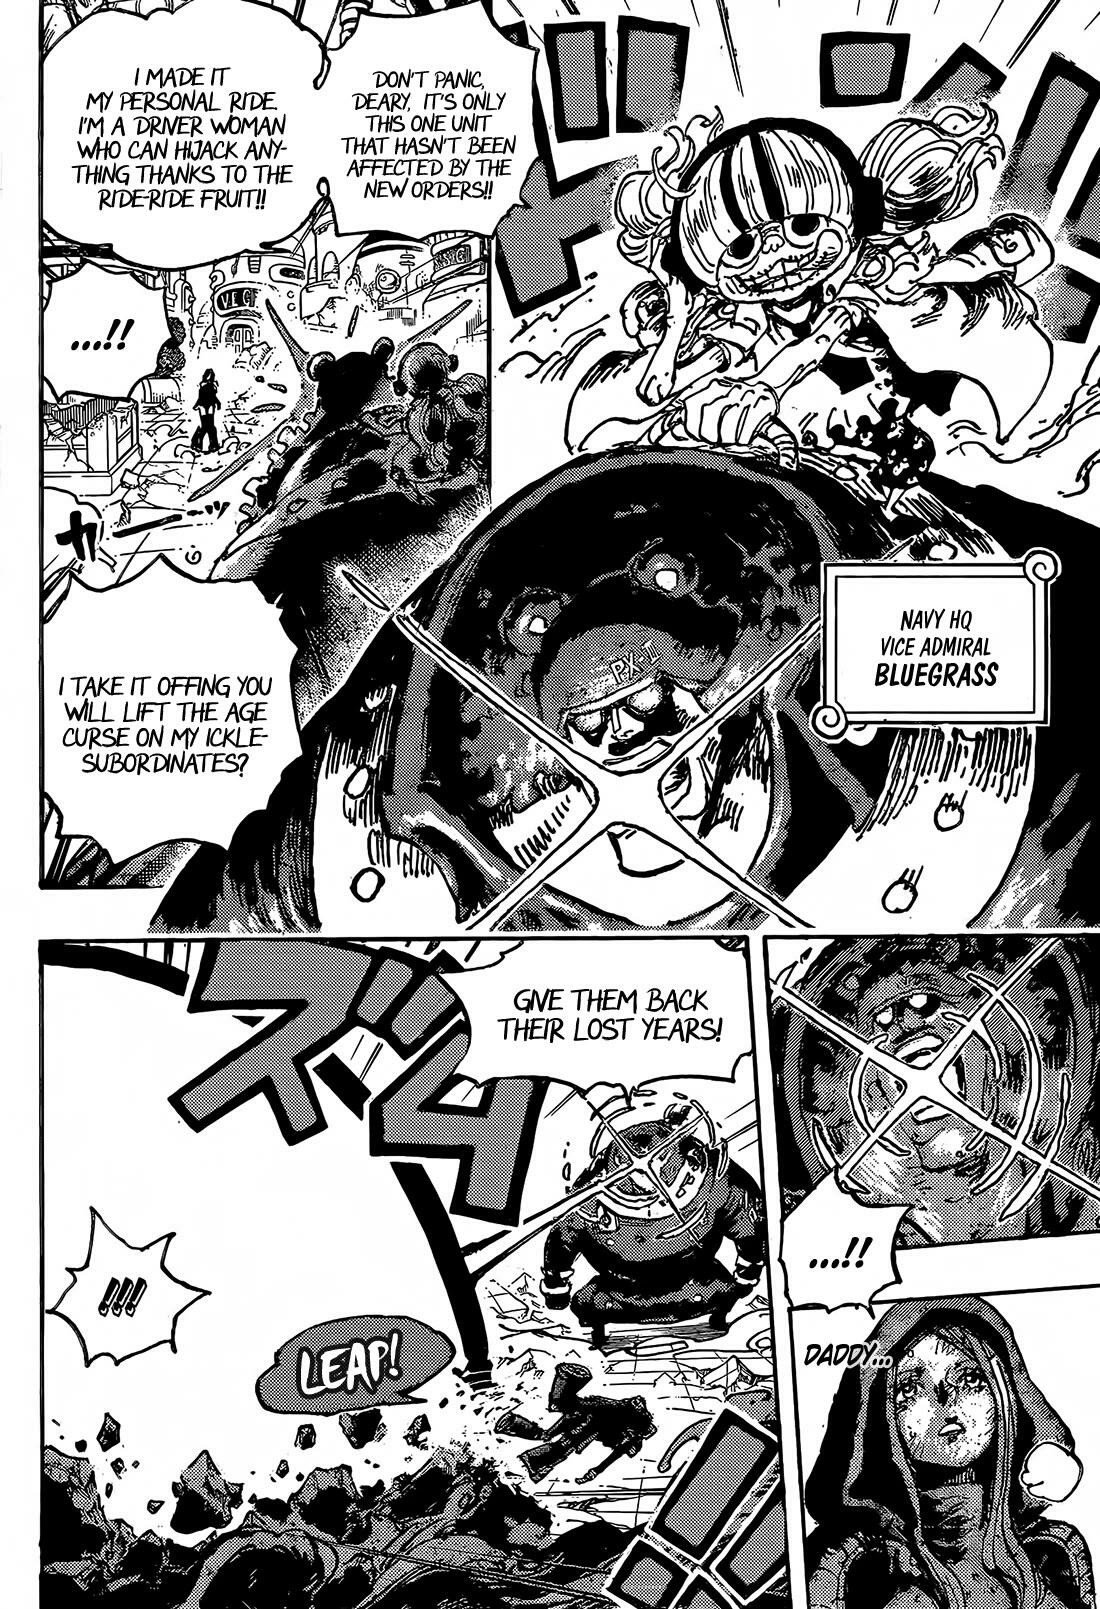 One Piece Ch 93: Luffy vs Arlong Part 2 Jay's Art - Illustrations ART street